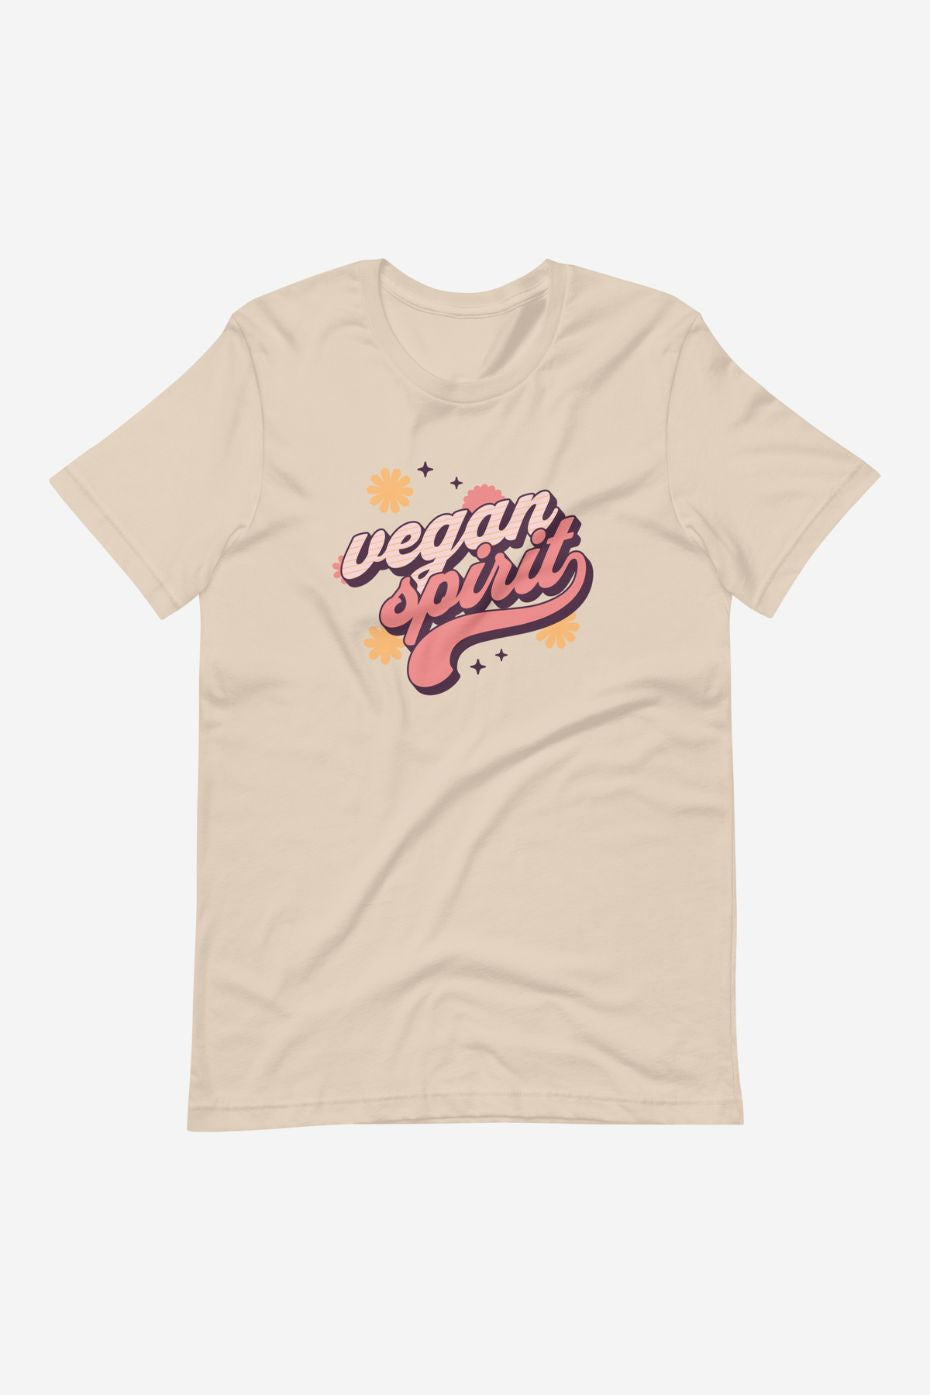 Vegan Spirit - Unisex t-shirt